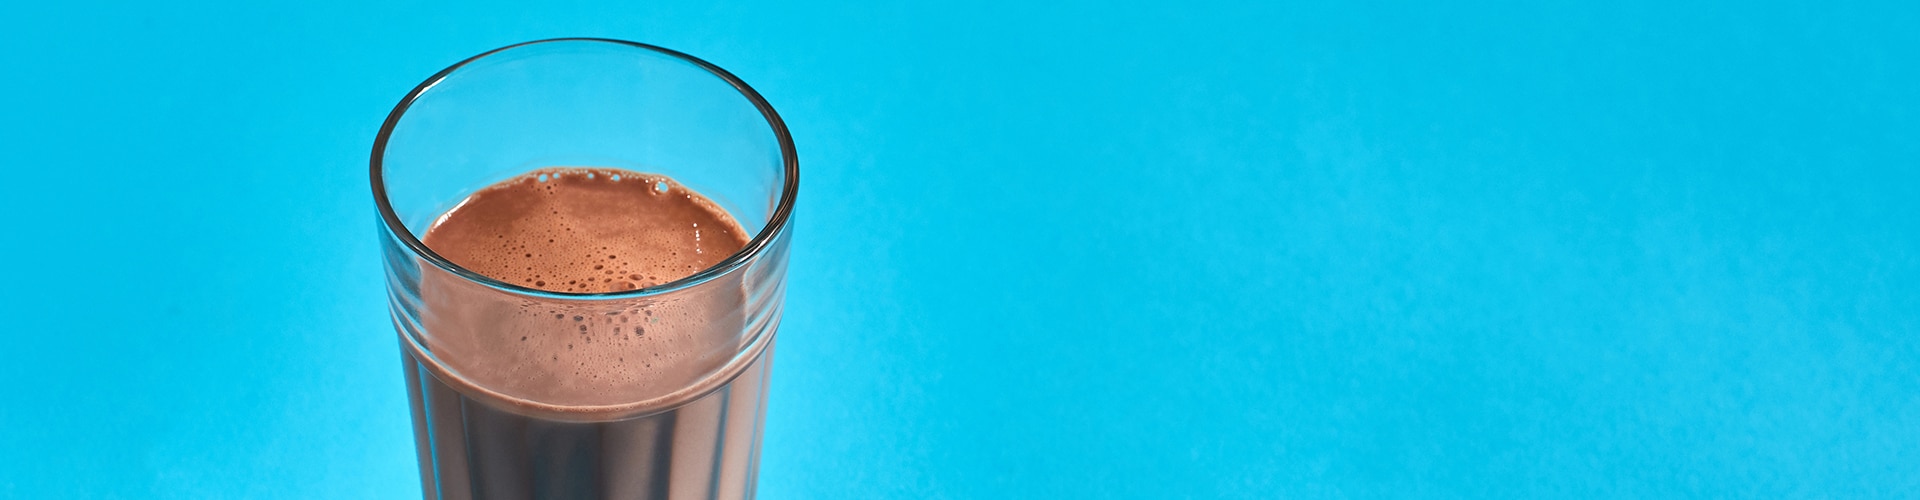 copo de milk shake de chocolate visto de cima num fundo azul